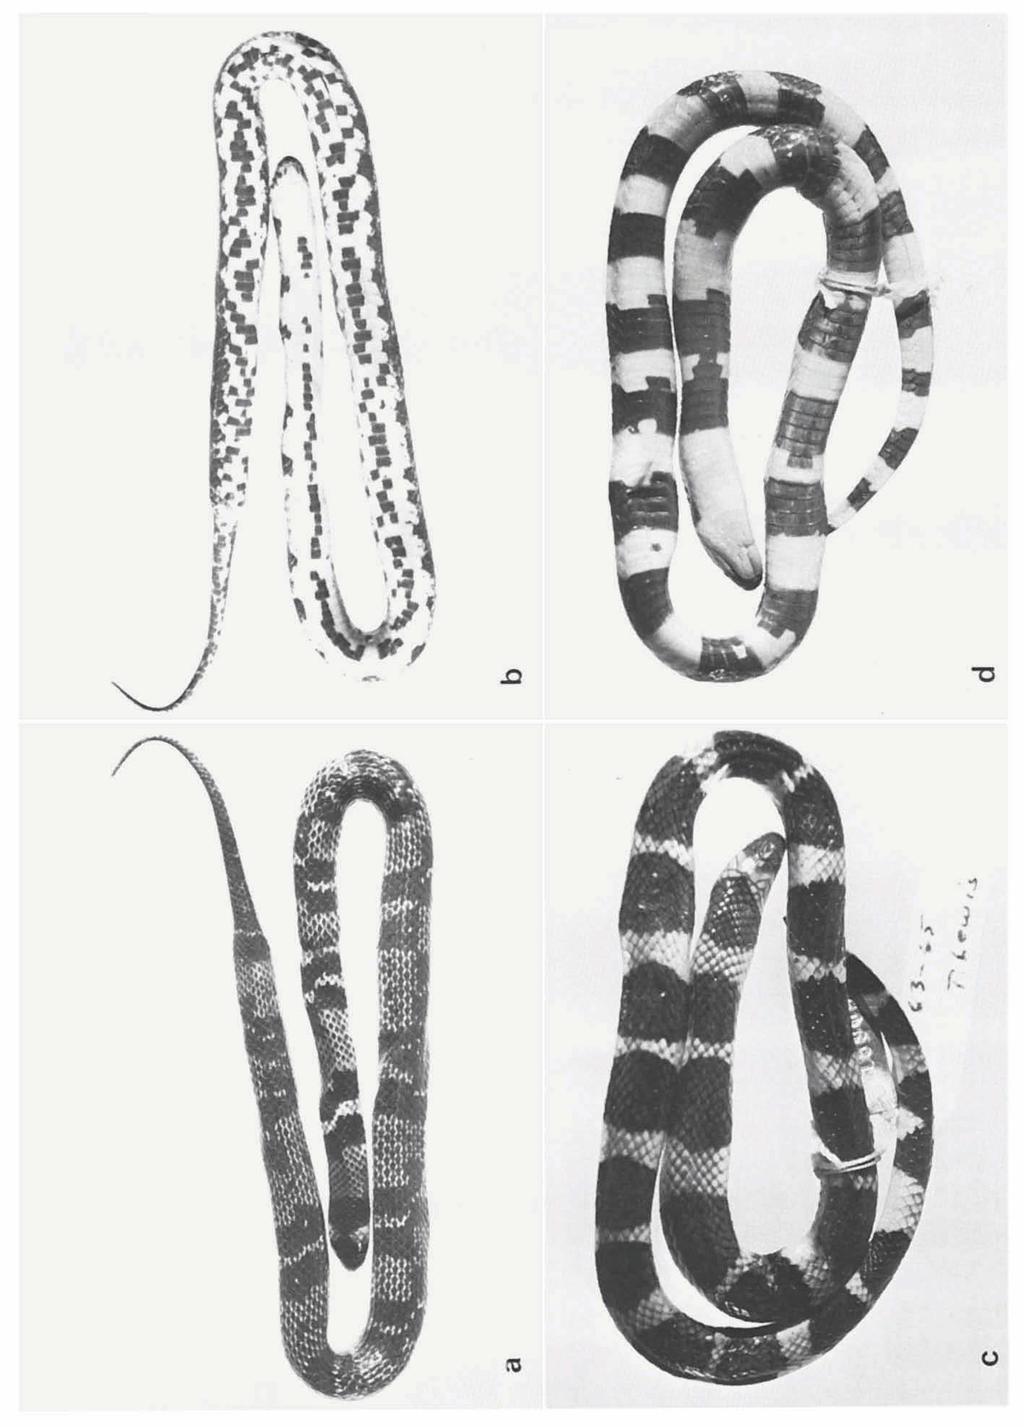 Figs, a, b. Atractus badius (F. Boie), 9 RMNH 18679, total length 415 + 71 mm. a, dorsal view; b, ventral view. Figs, c, d.